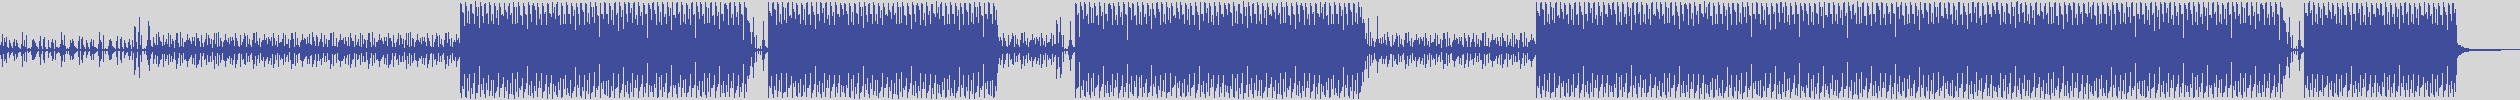 nf_boyz_records [NFY013] Dj Iceberg - Snowing [Extended Mix] audio wave form